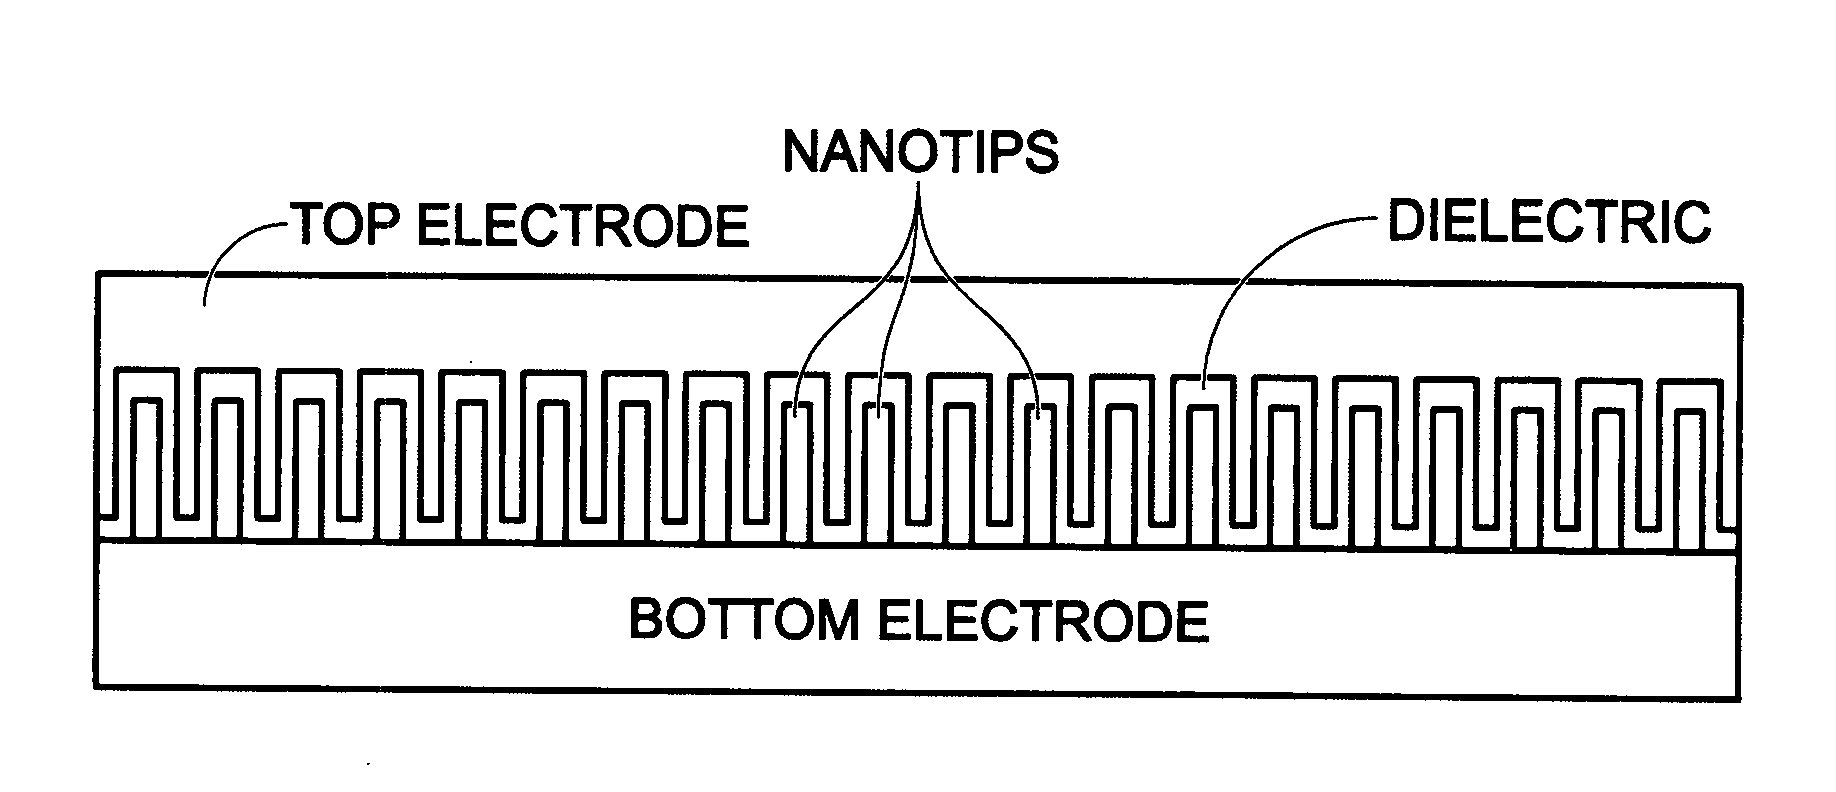 Nanotip capacitor